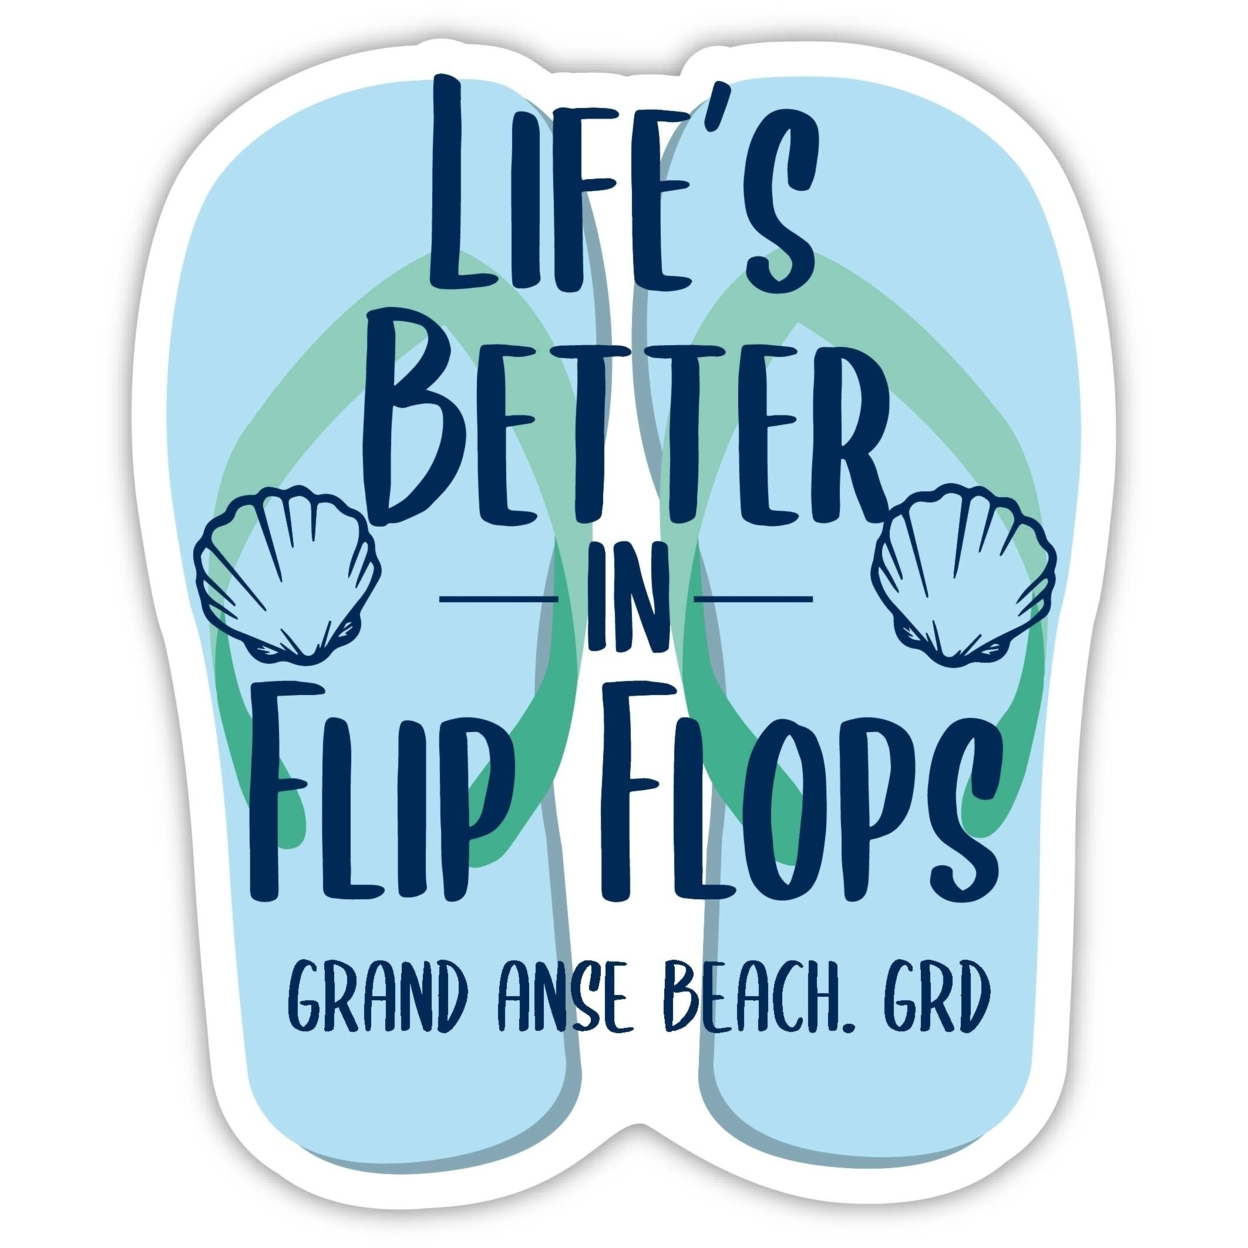 Grand Anse Beach Grenada Souvenir 4 Inch Vinyl Decal Sticker Flip Flop Design